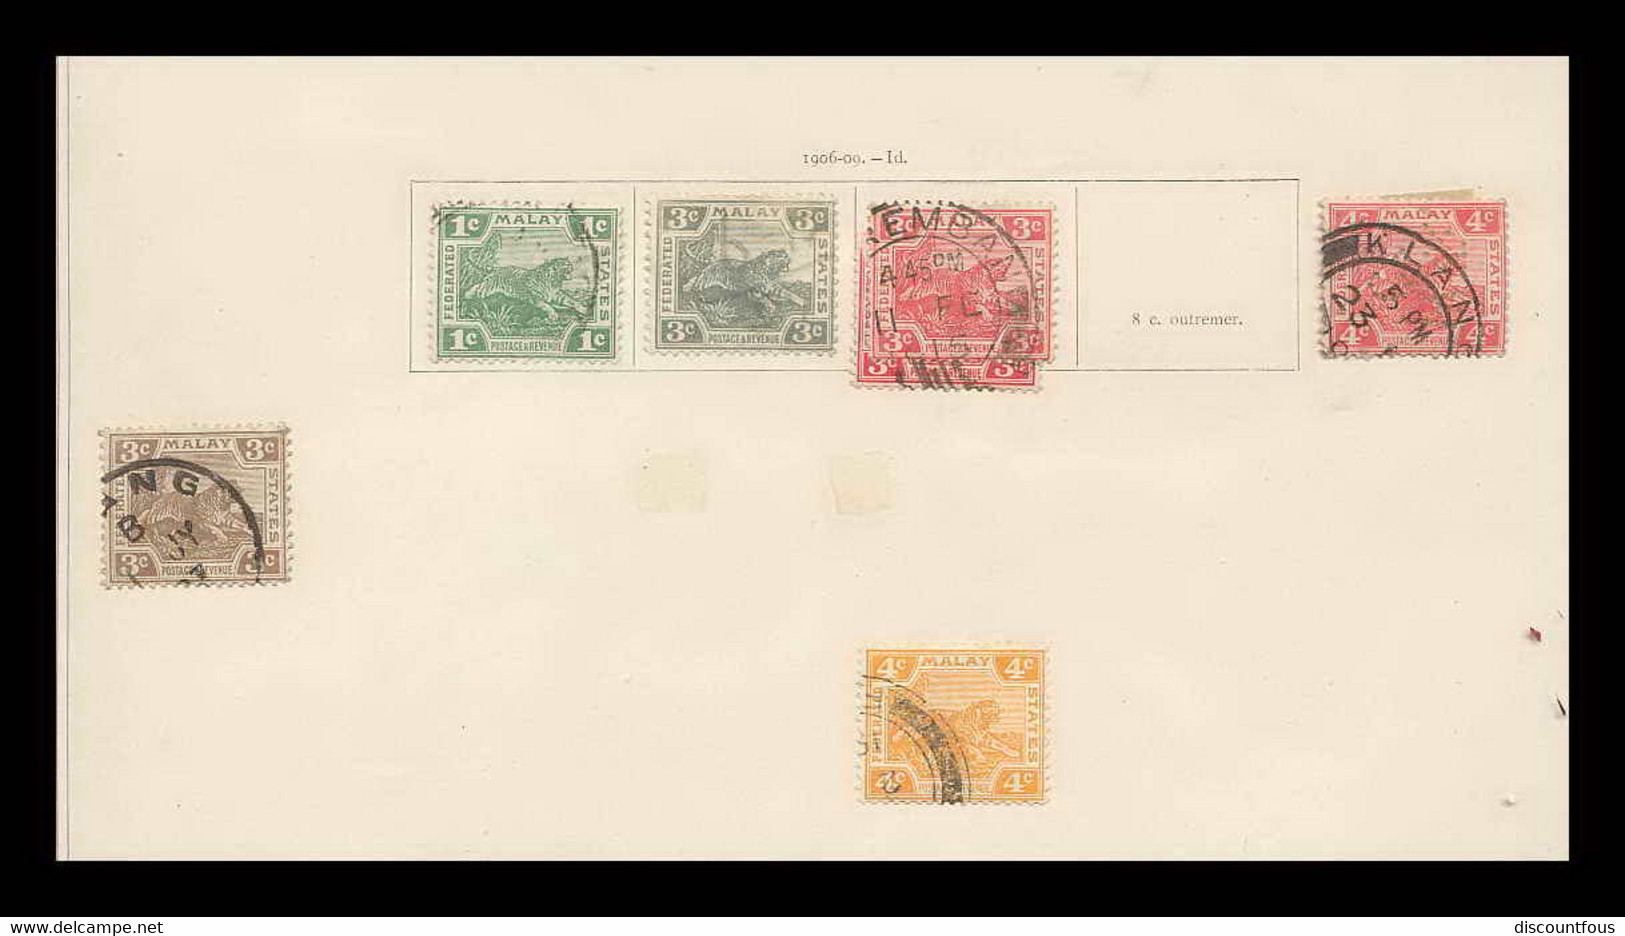 depart 1 euro 32-collection de timbres + documents asie asia 58 - malaya singapore - 37 cans à voir